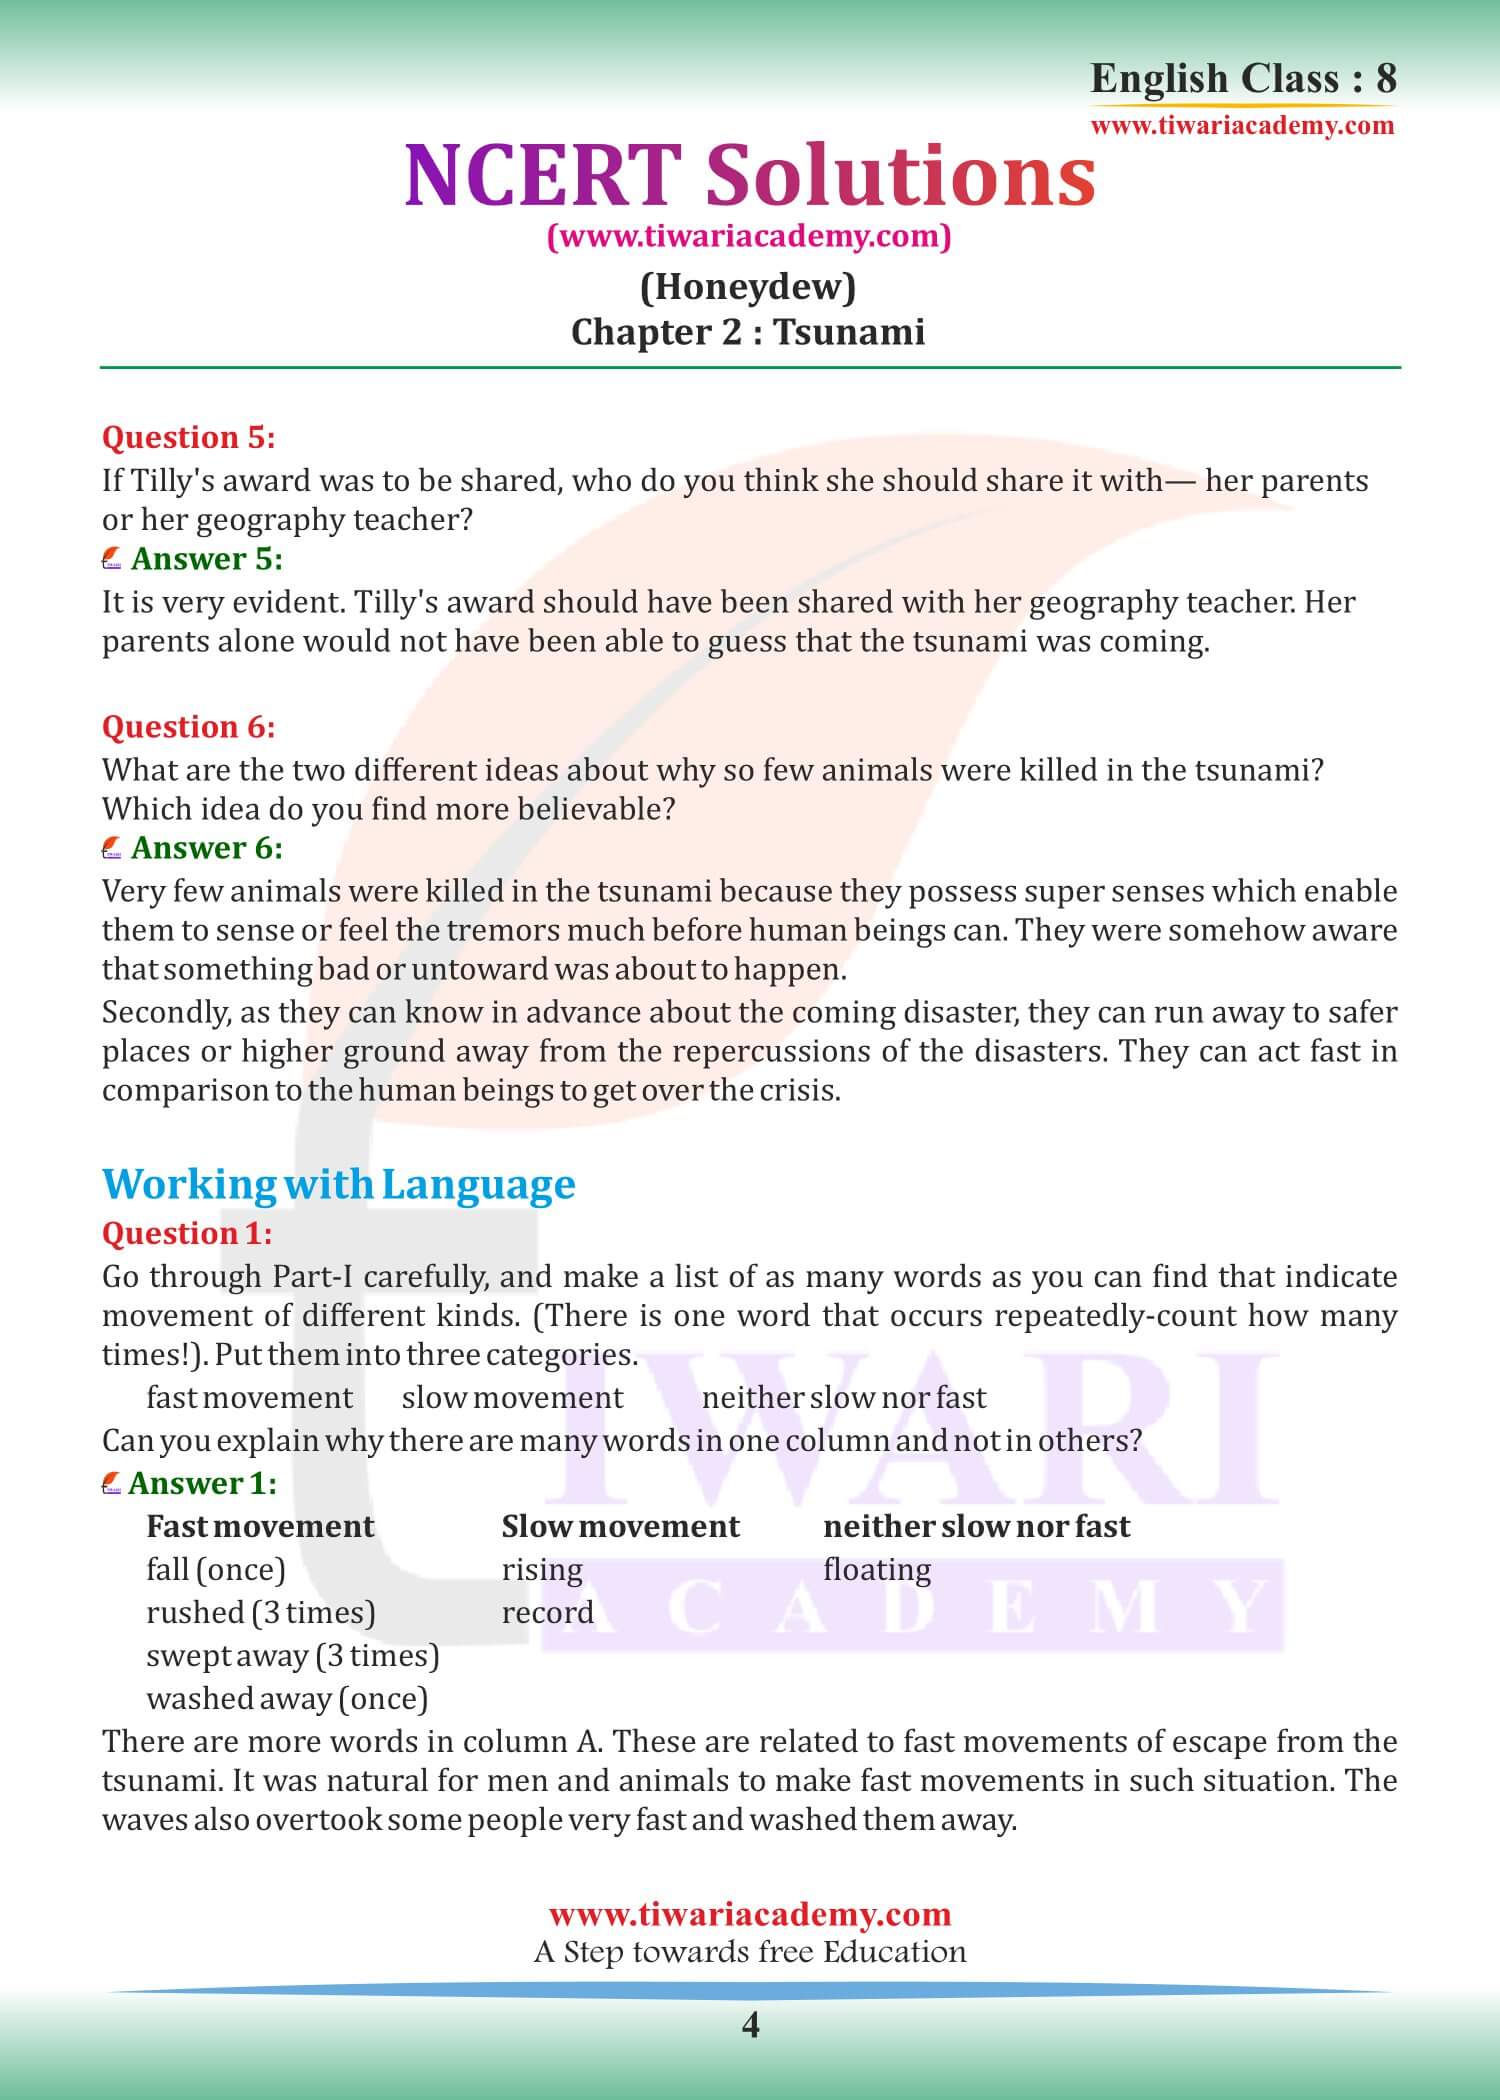 Class 8 English Honeydew Chapter 2 The Tsunami